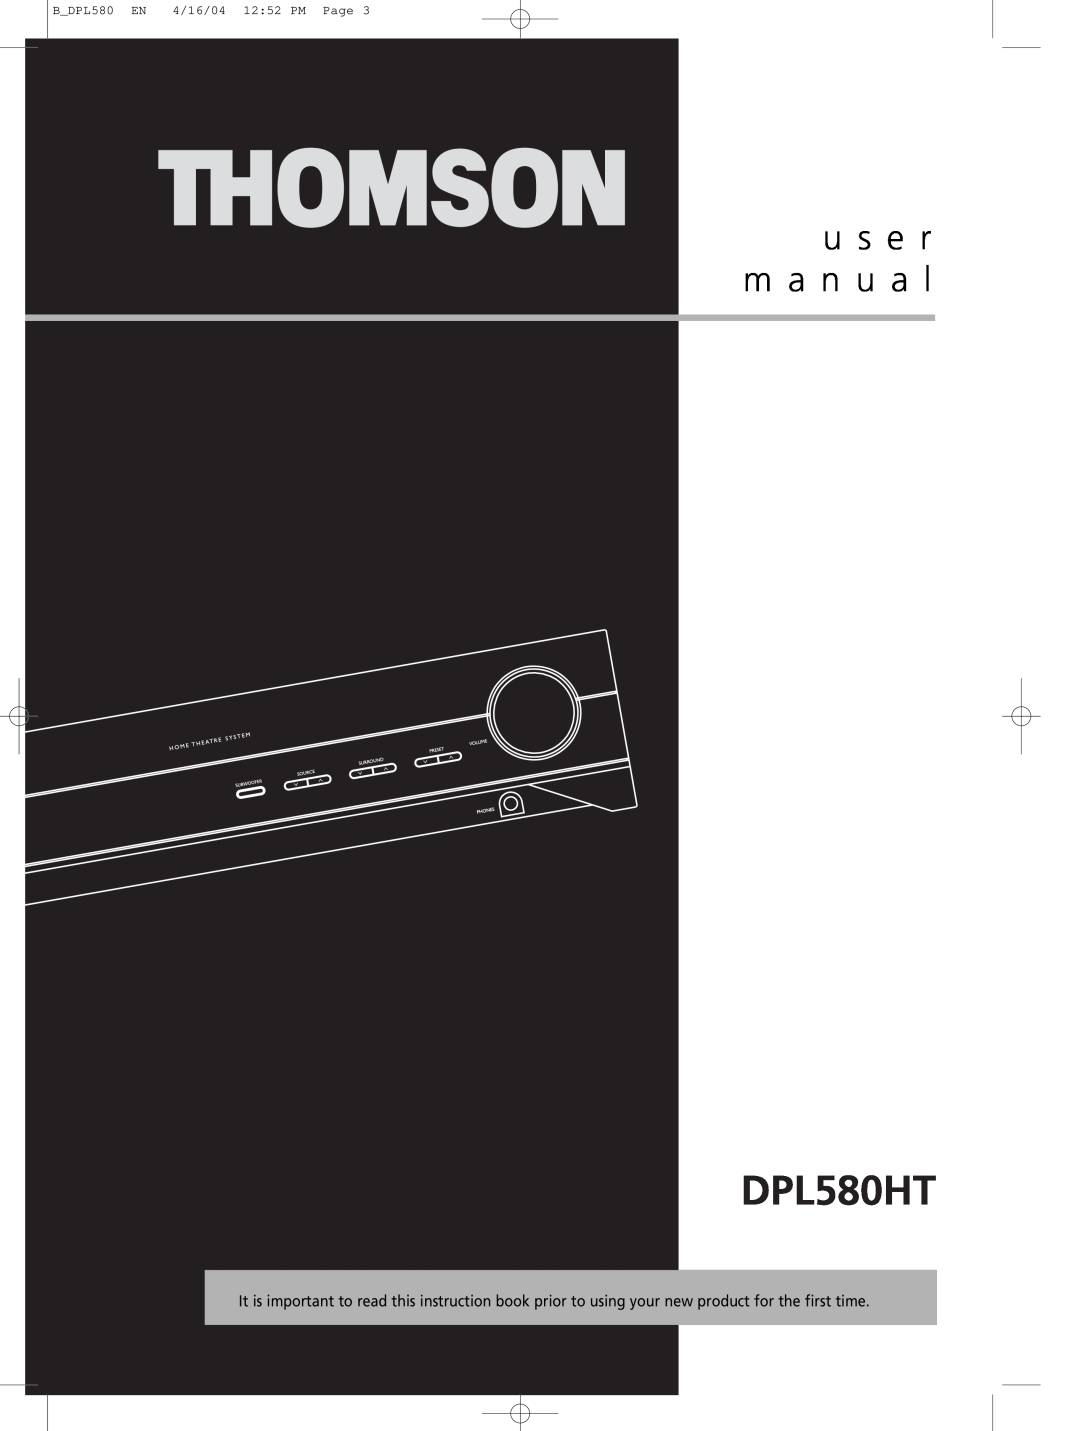 Technicolor - Thomson DPL580HT manual u s e r m a n u a l, B DPL580 EN, 4/16/04 12:52 PM Page 